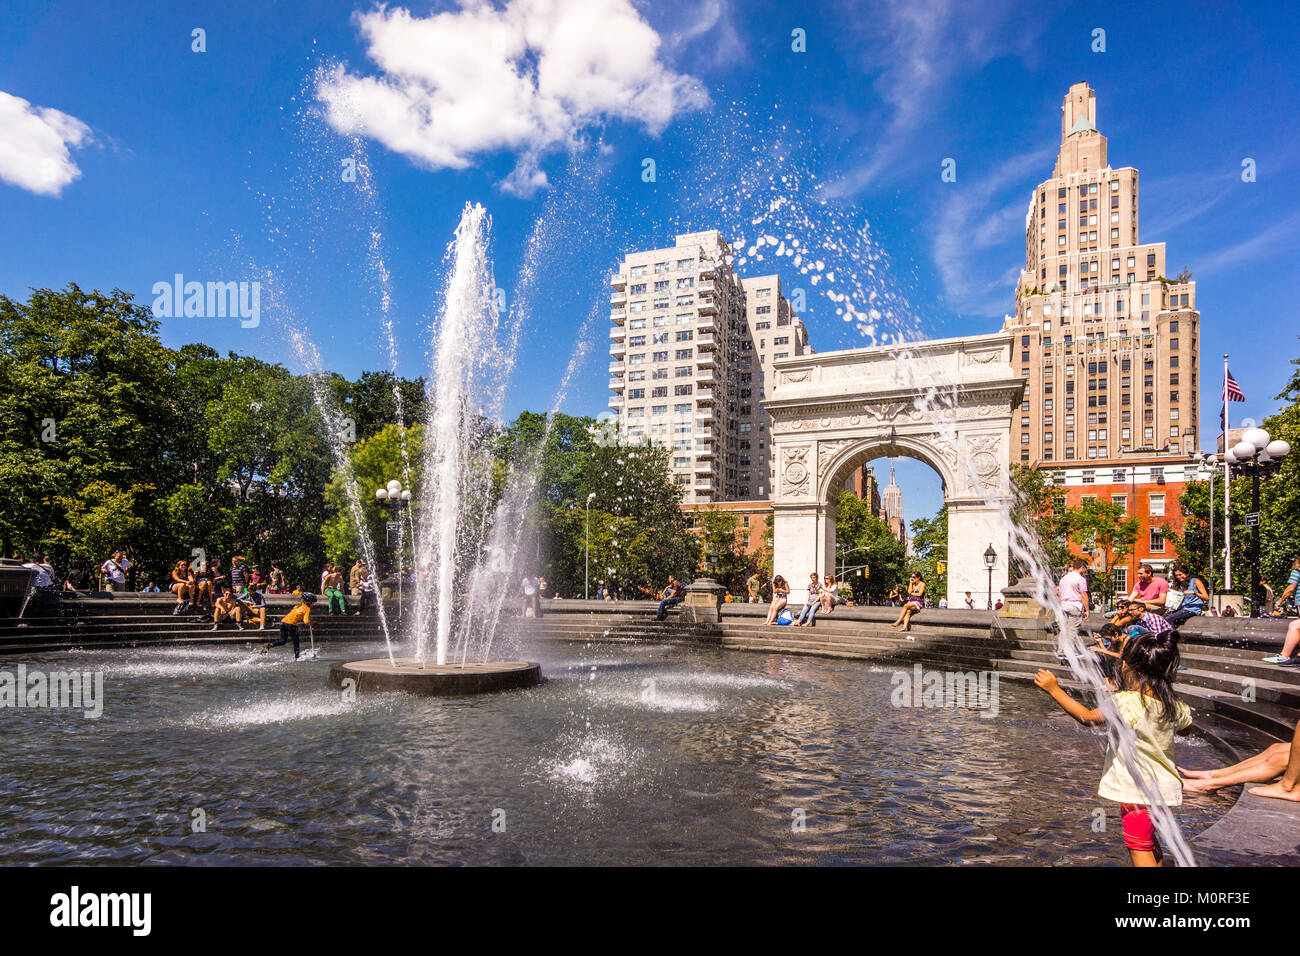 Washington Square Park Manhattan - New York, New York, USA Banque D'Images